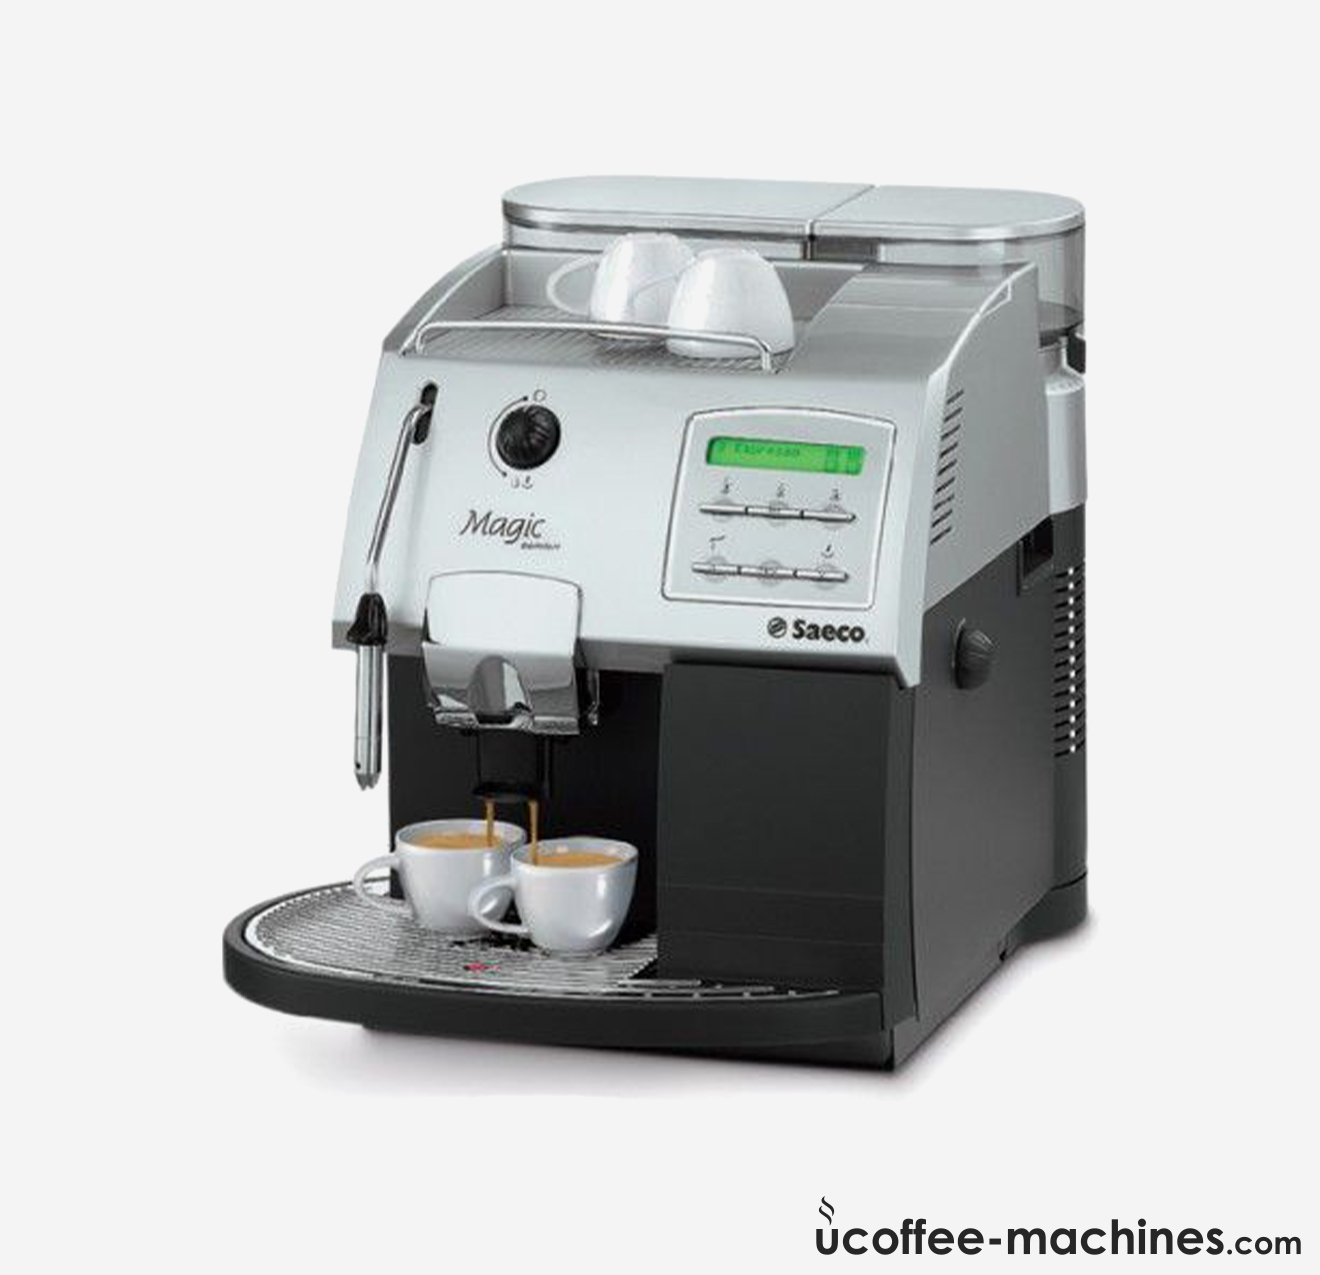 Saeco Magic Comfort New - U'coffee-machines